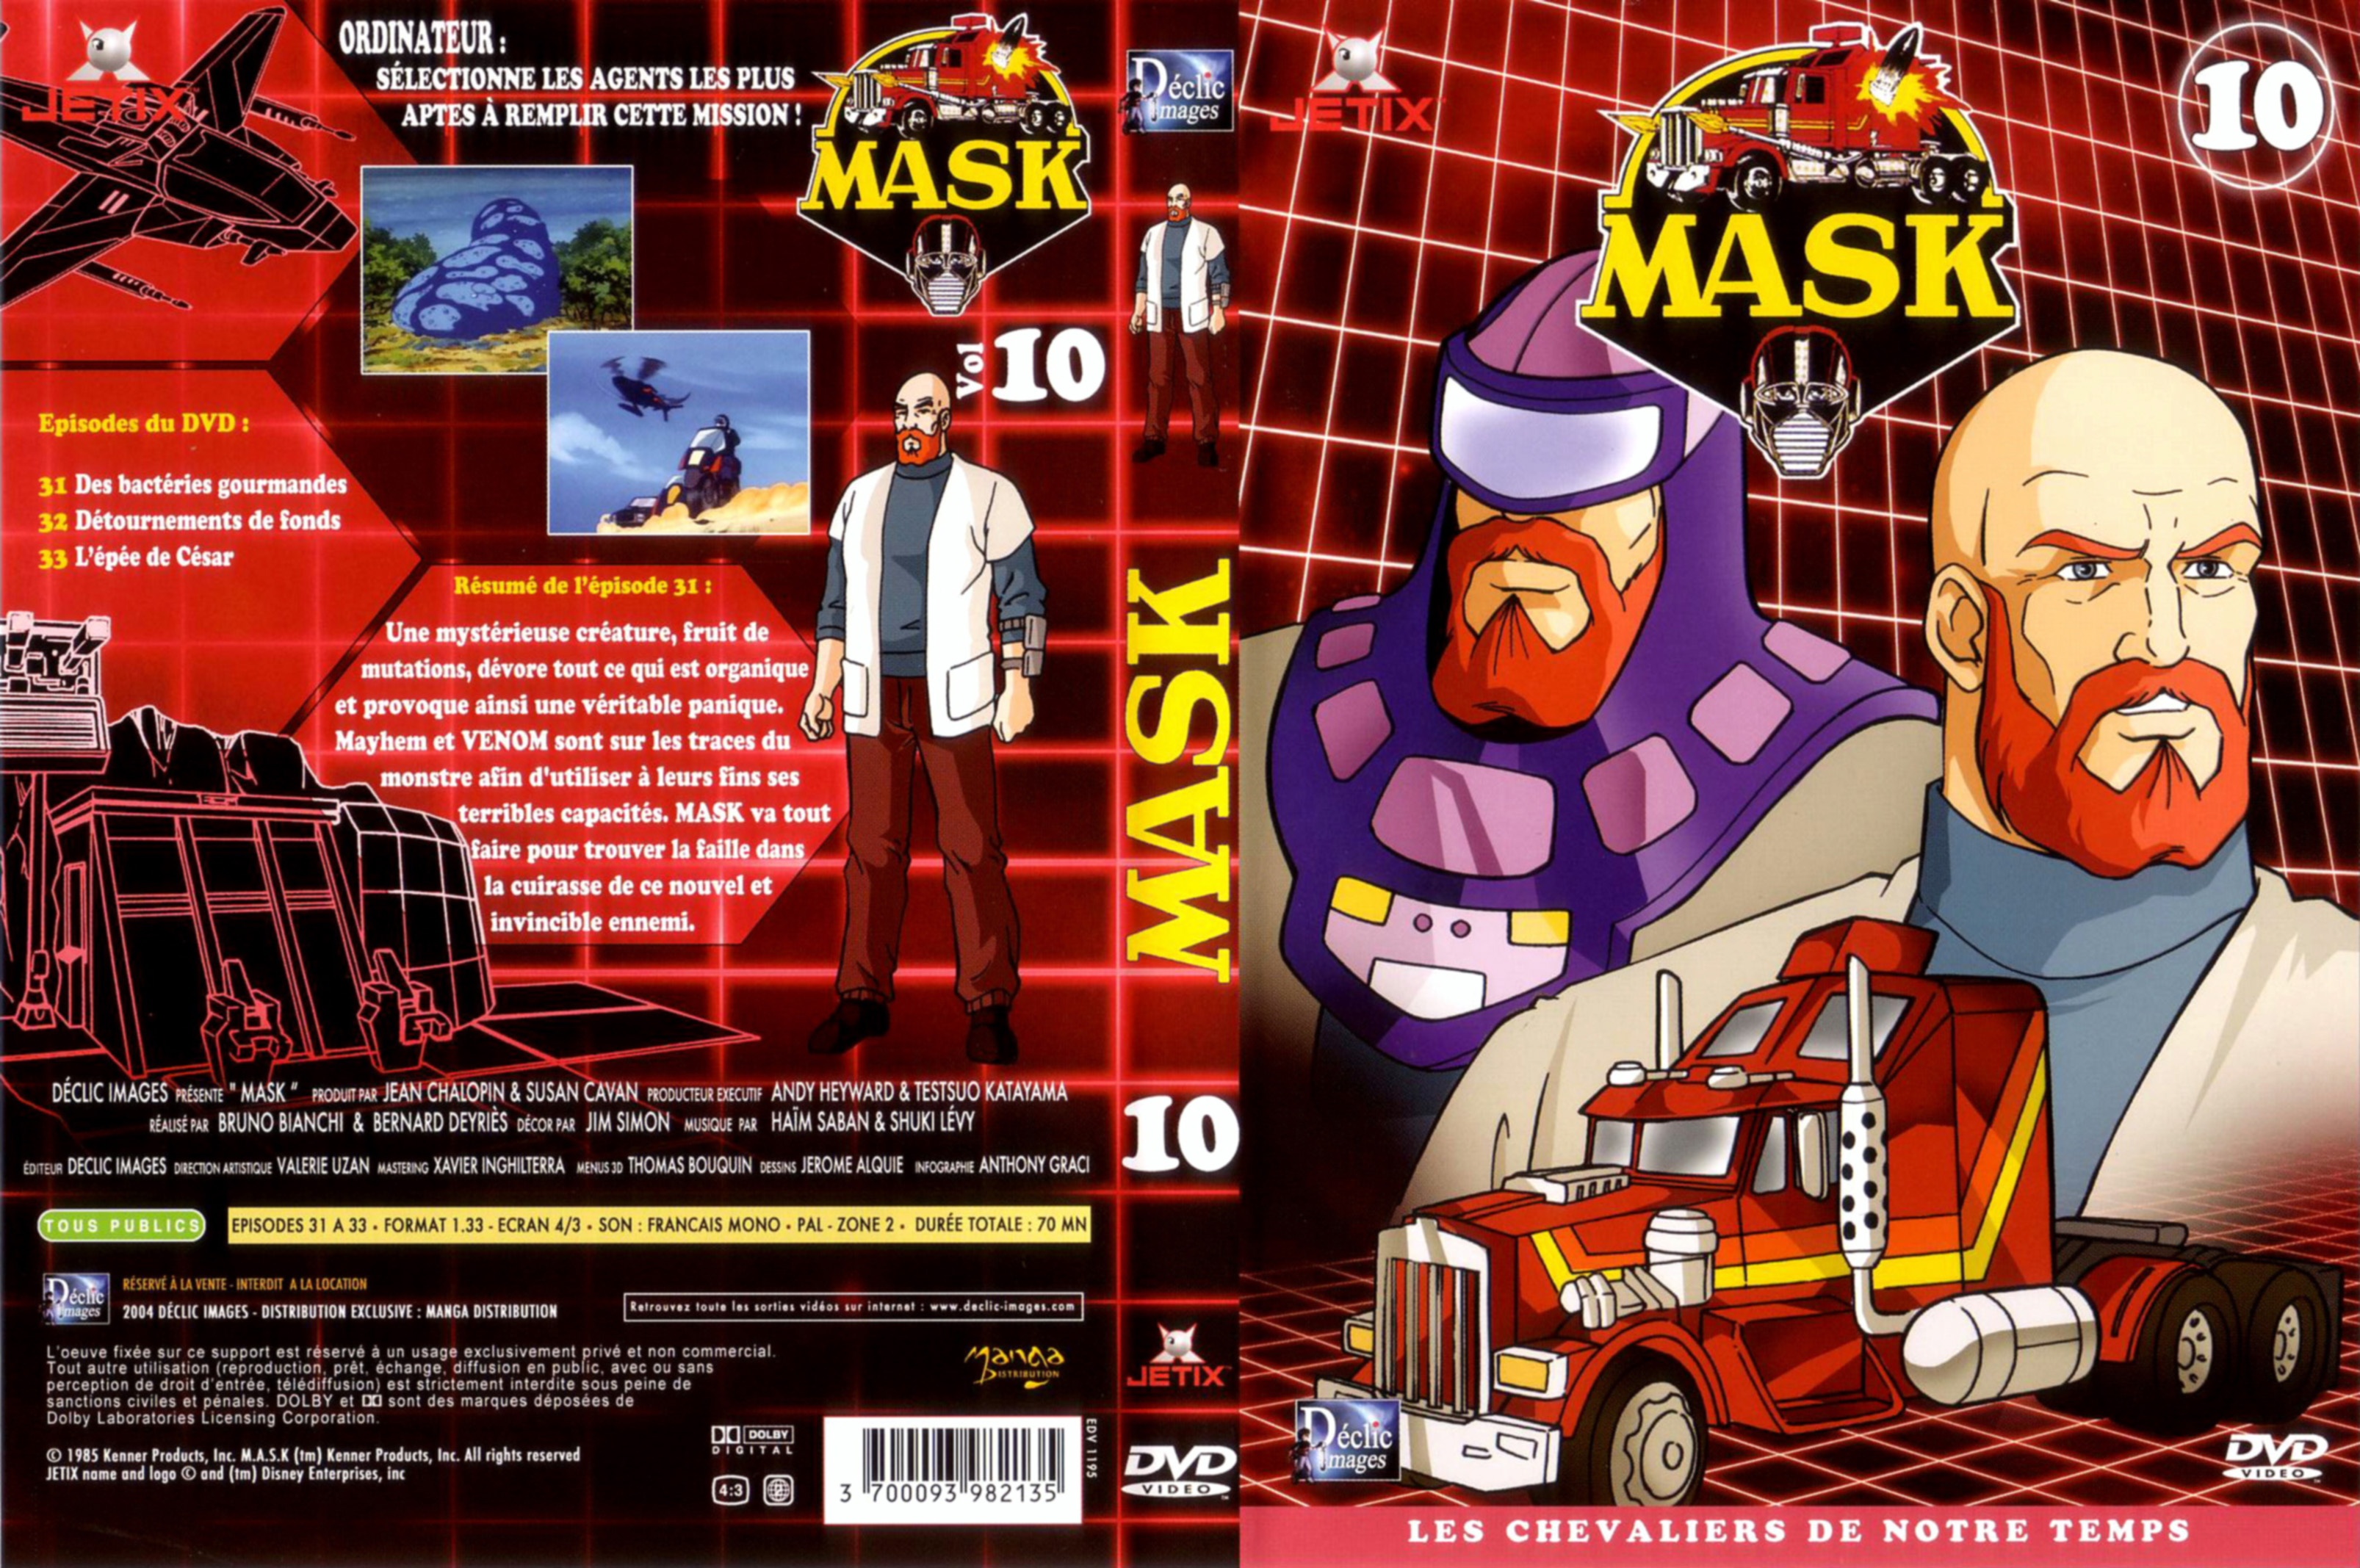 Jaquette DVD Mask vol 10